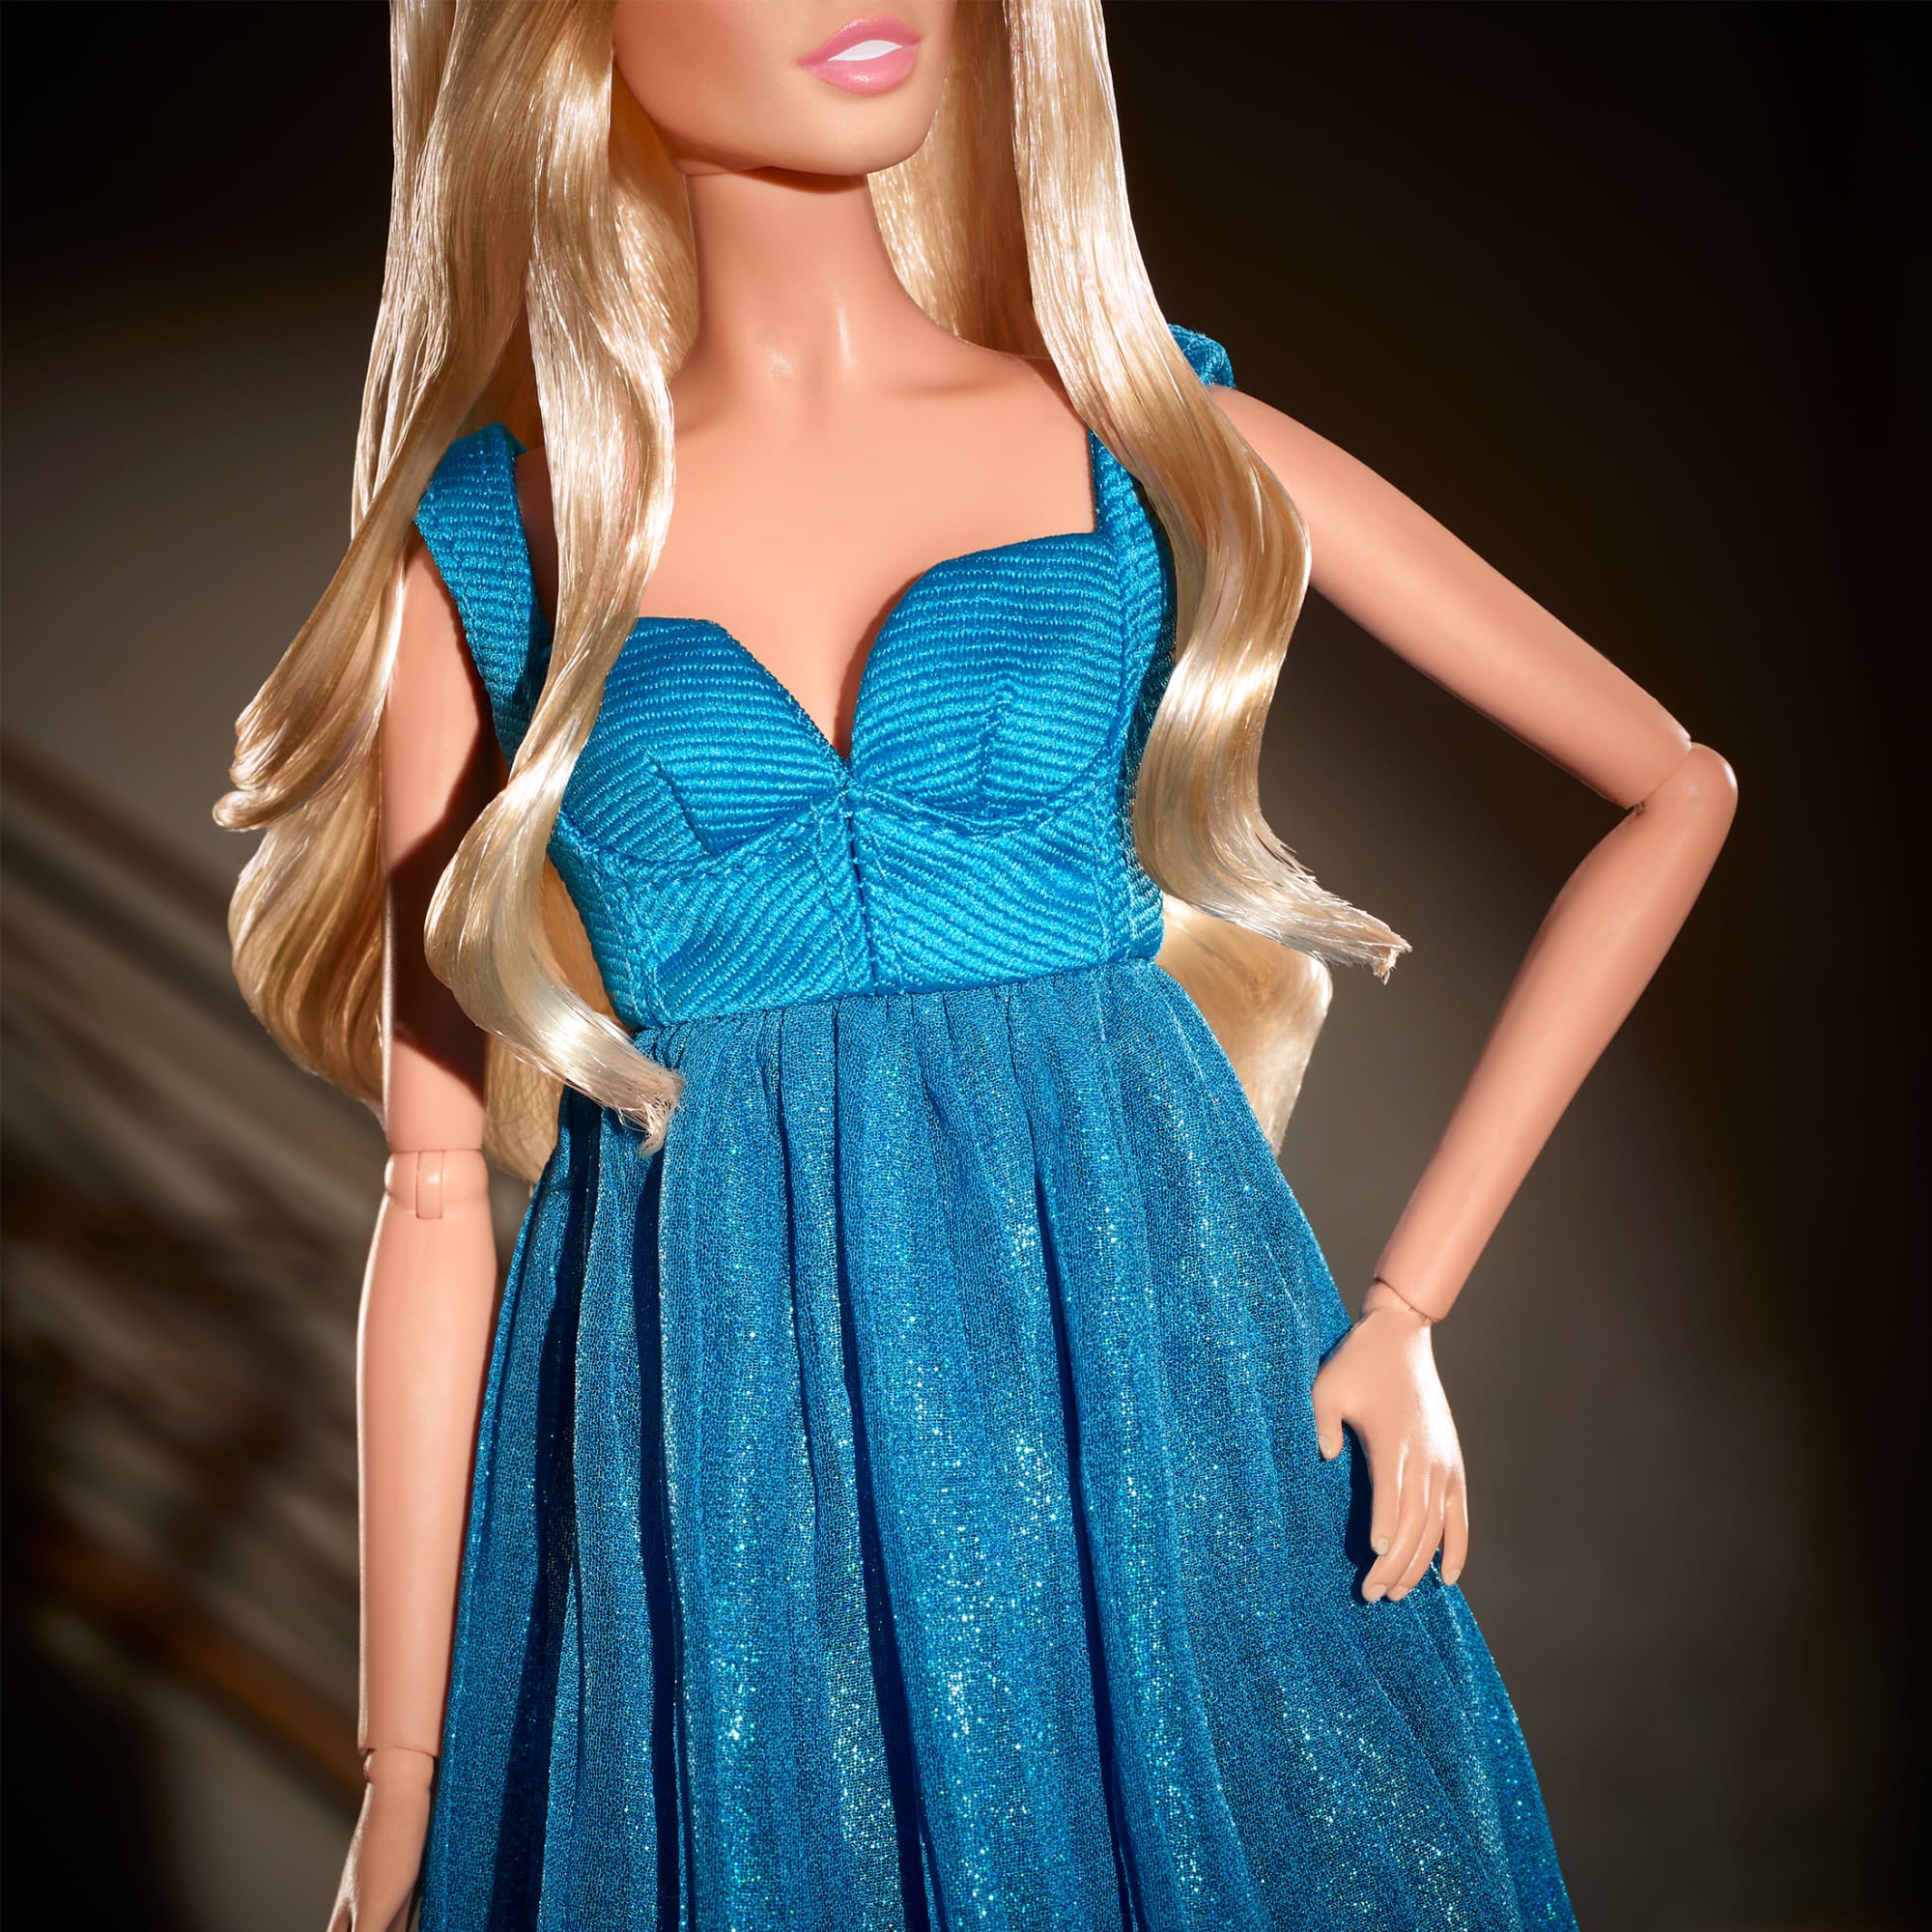 Barbie Supermodel Claudia Schiffer Doll in Versace Gown